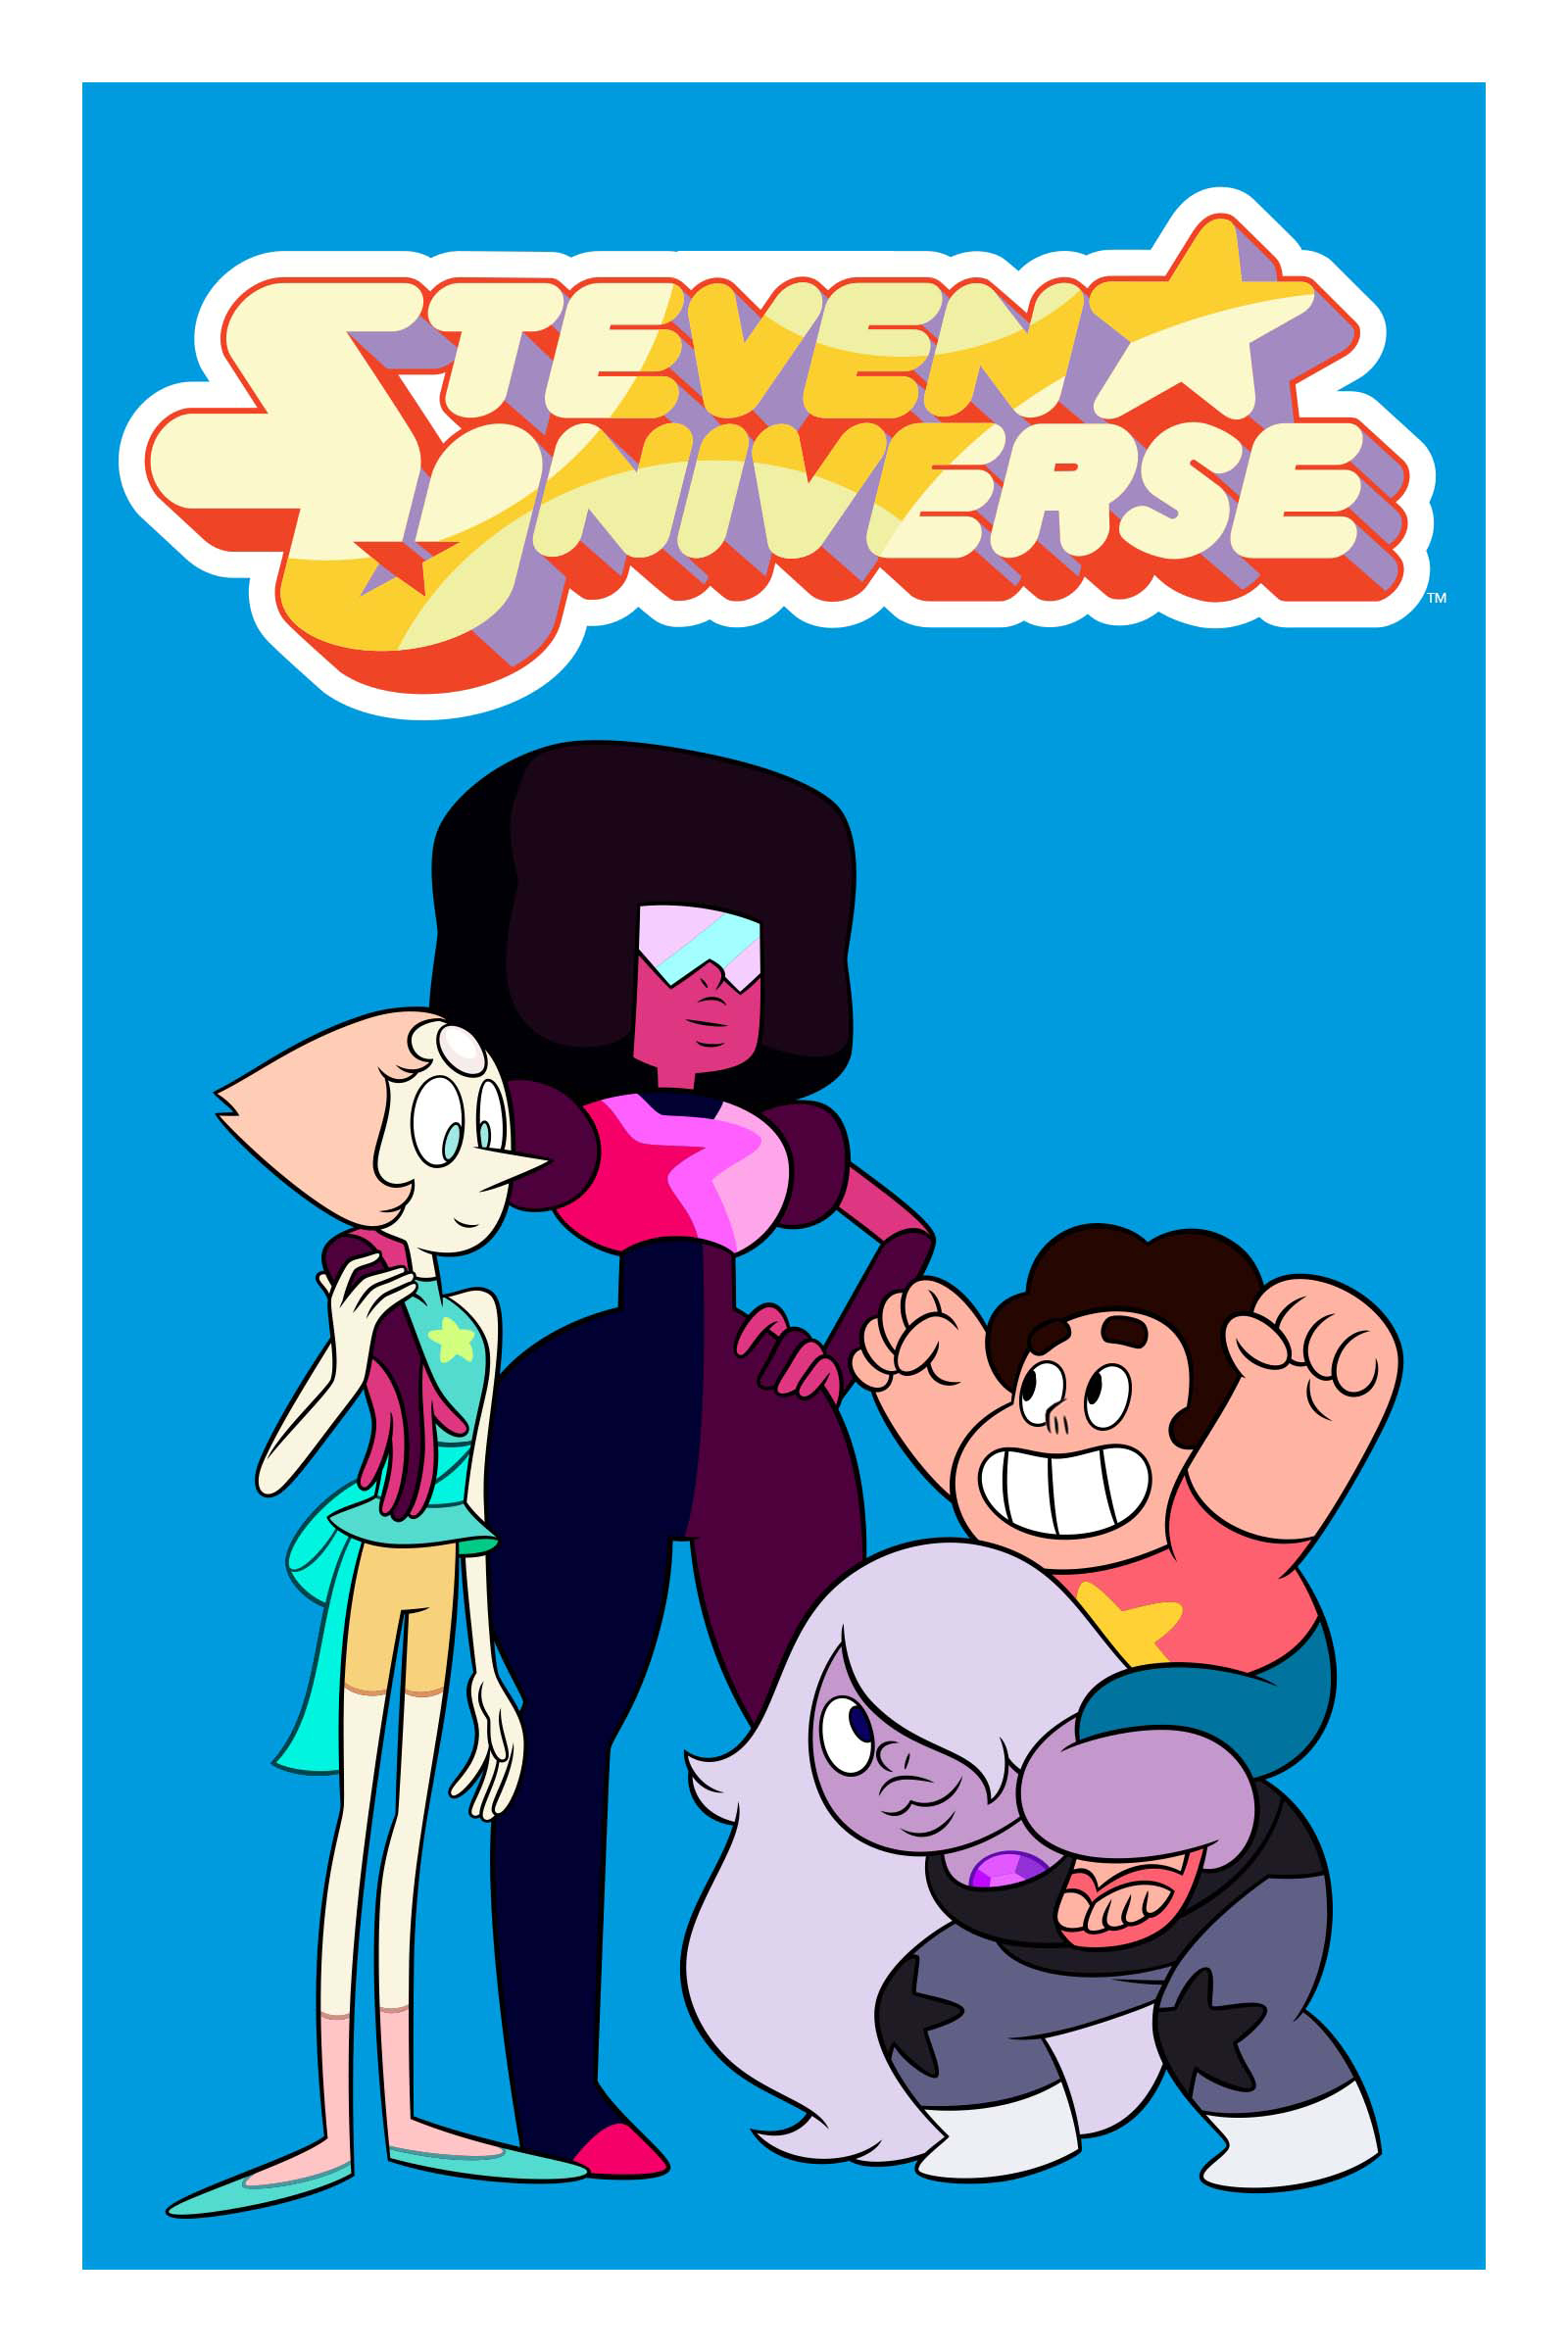 Watch Steven Universe Future season 1 episode 16 streaming online